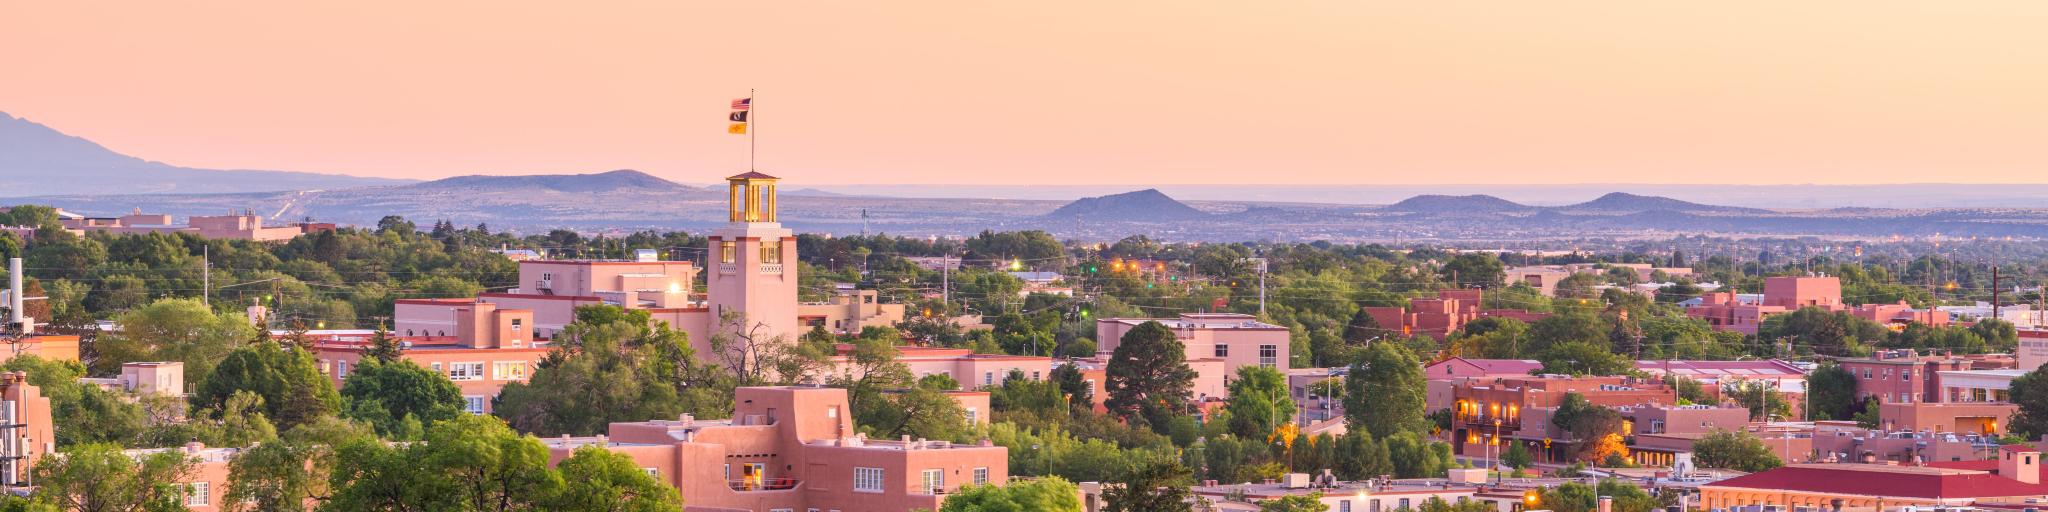 Santa Fe, New Mexico, USA downtown skyline at dusk.